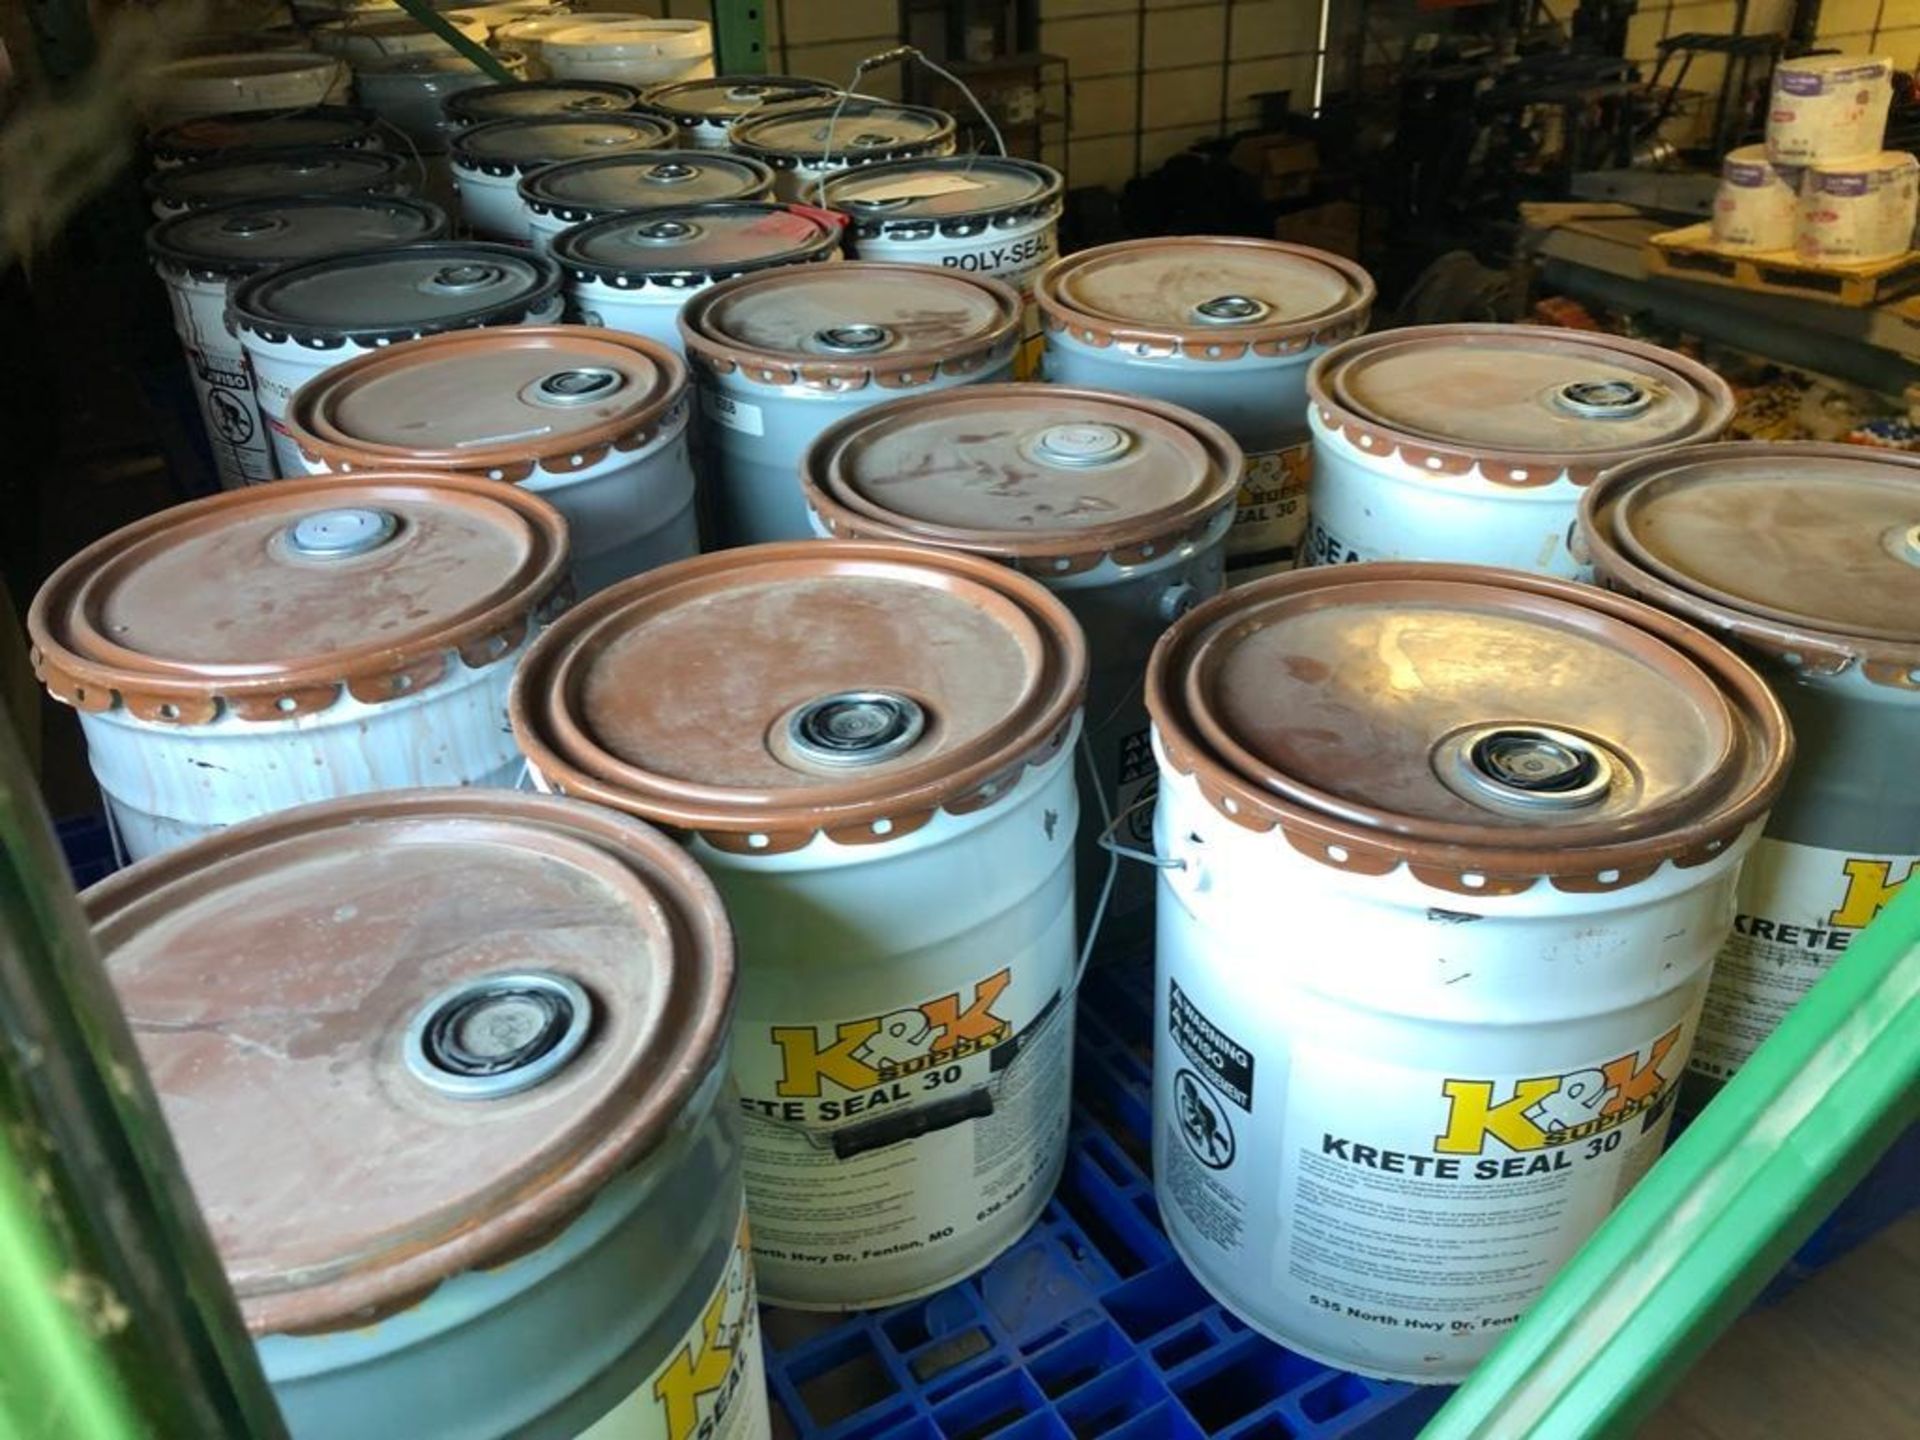 Pallet - (10) Buckets of  K&K Krete Seal 30 Concrete Sealer. Located in Hazelwood, MO - Image 2 of 3